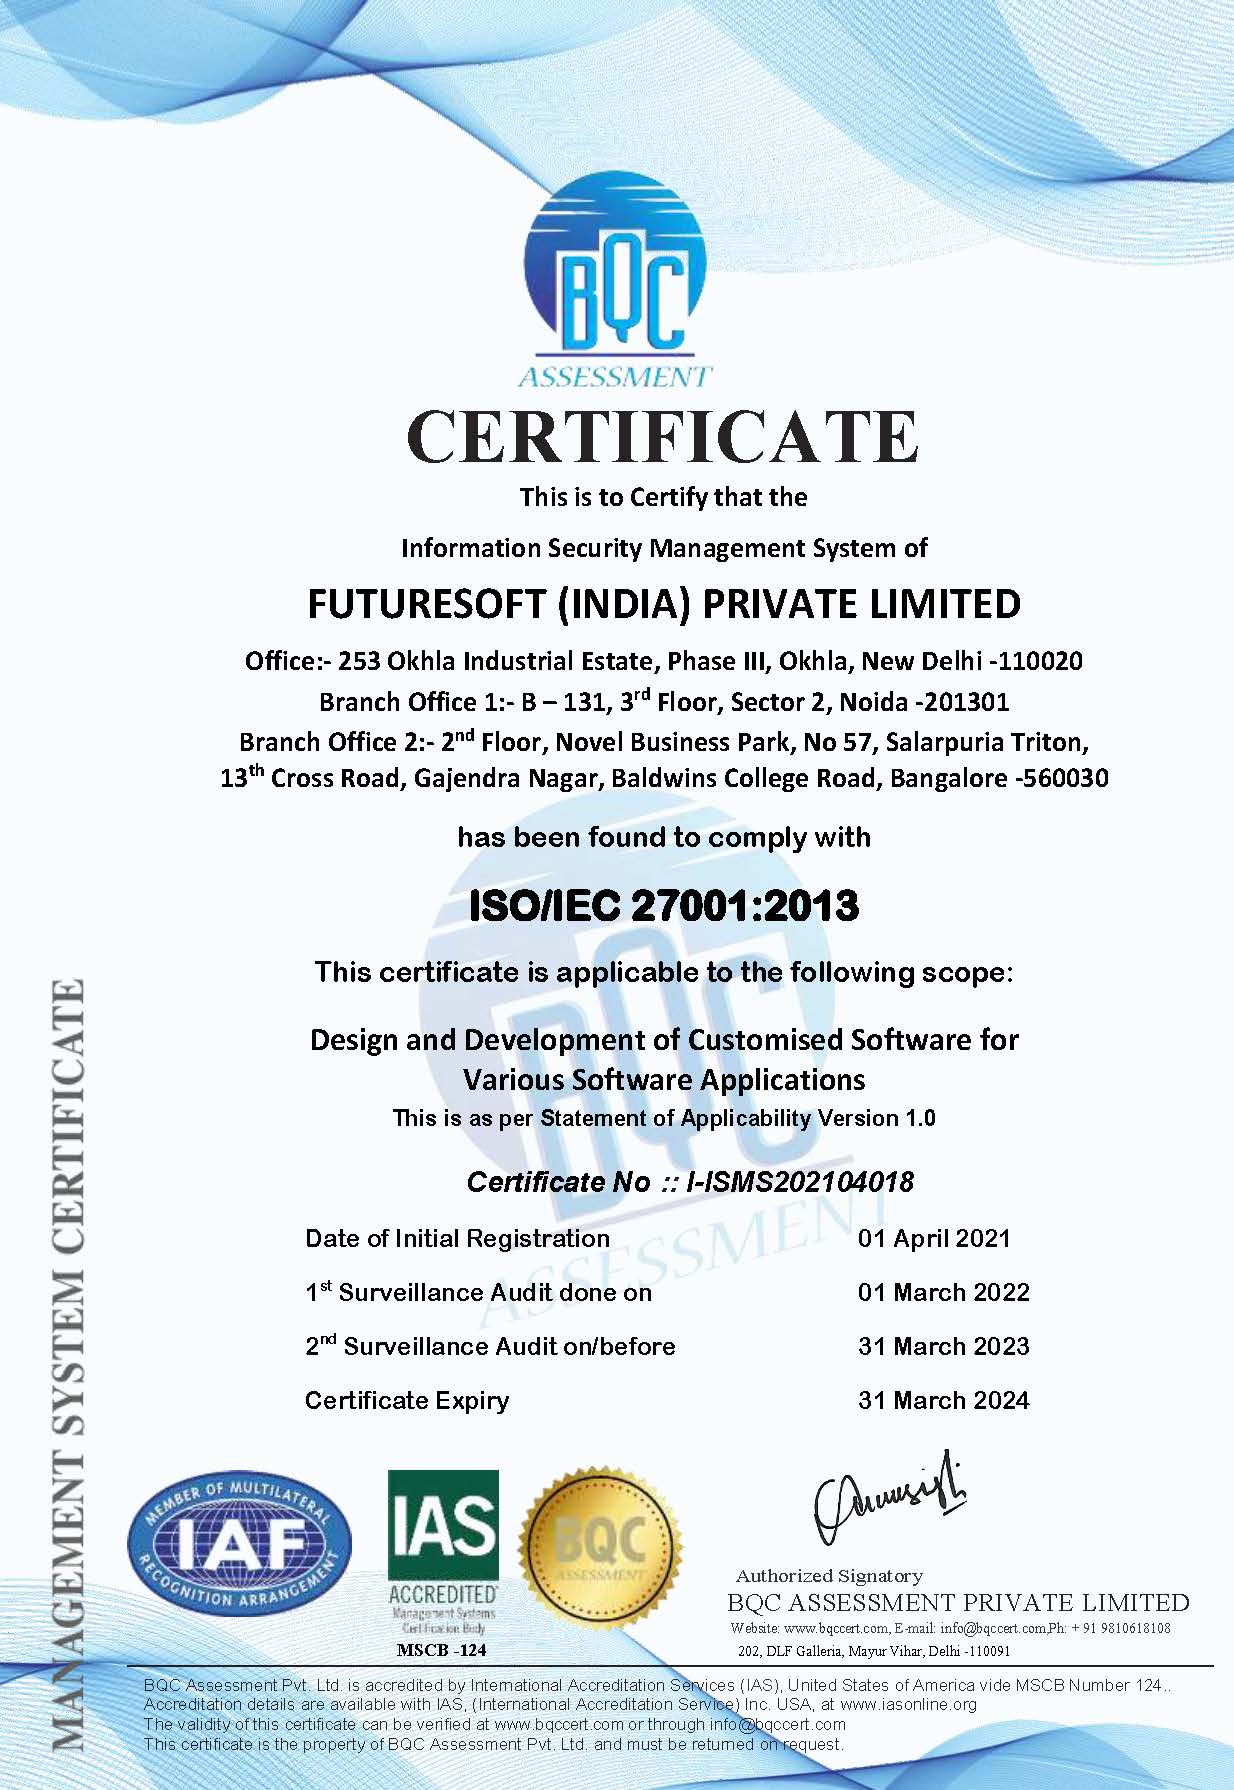 FUTURESOFT-27001-2013 Certified